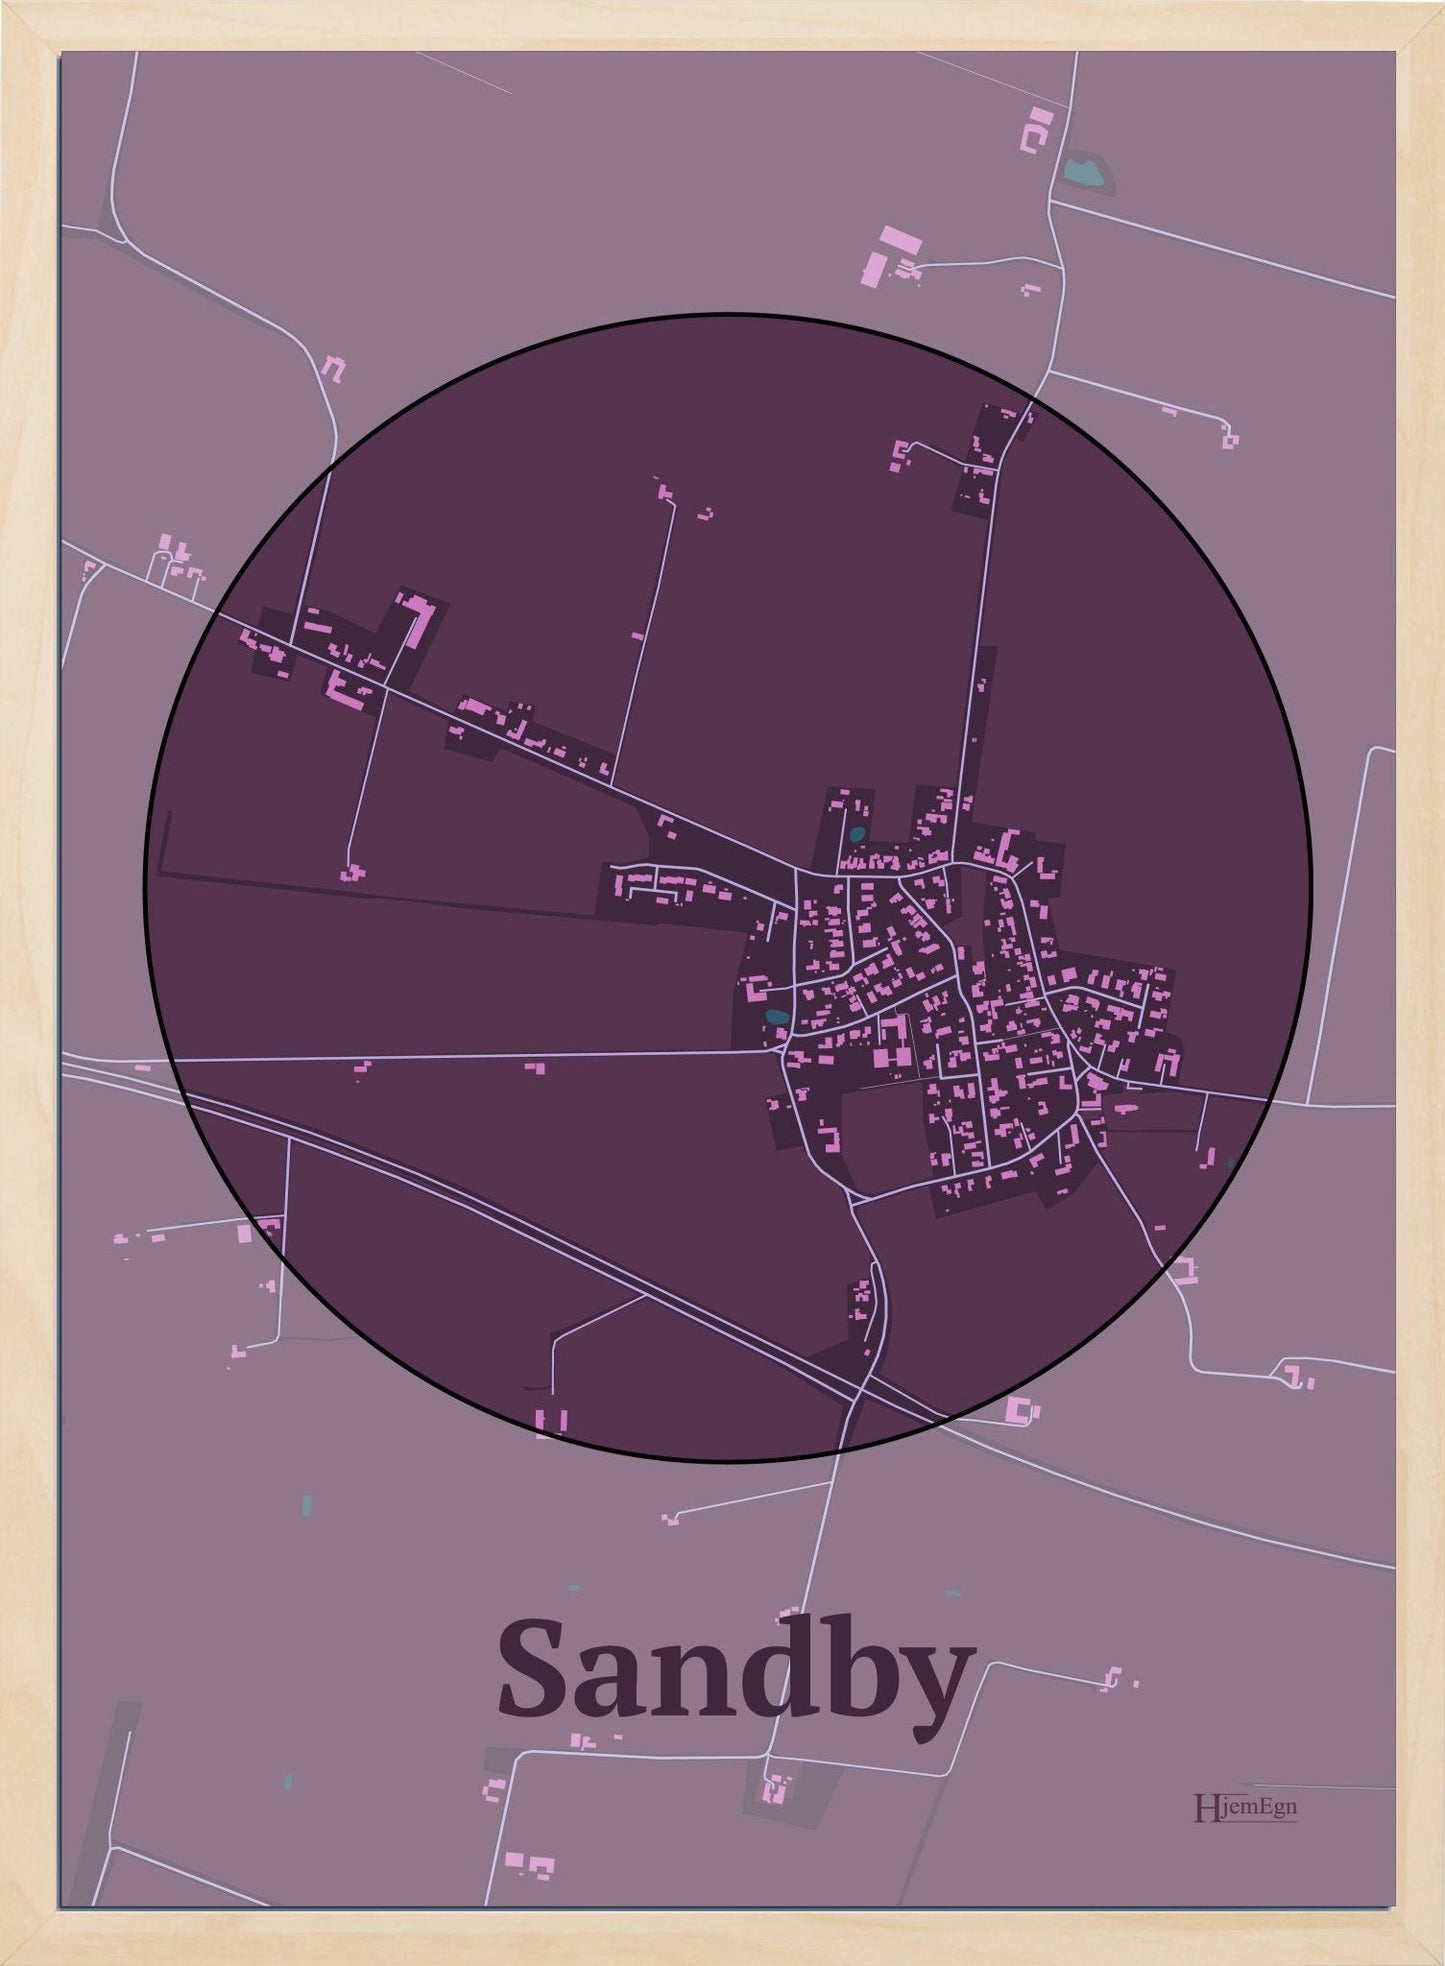 Sandby plakat i farve mørk rød og HjemEgn.dk design centrum. Design bykort for Sandby